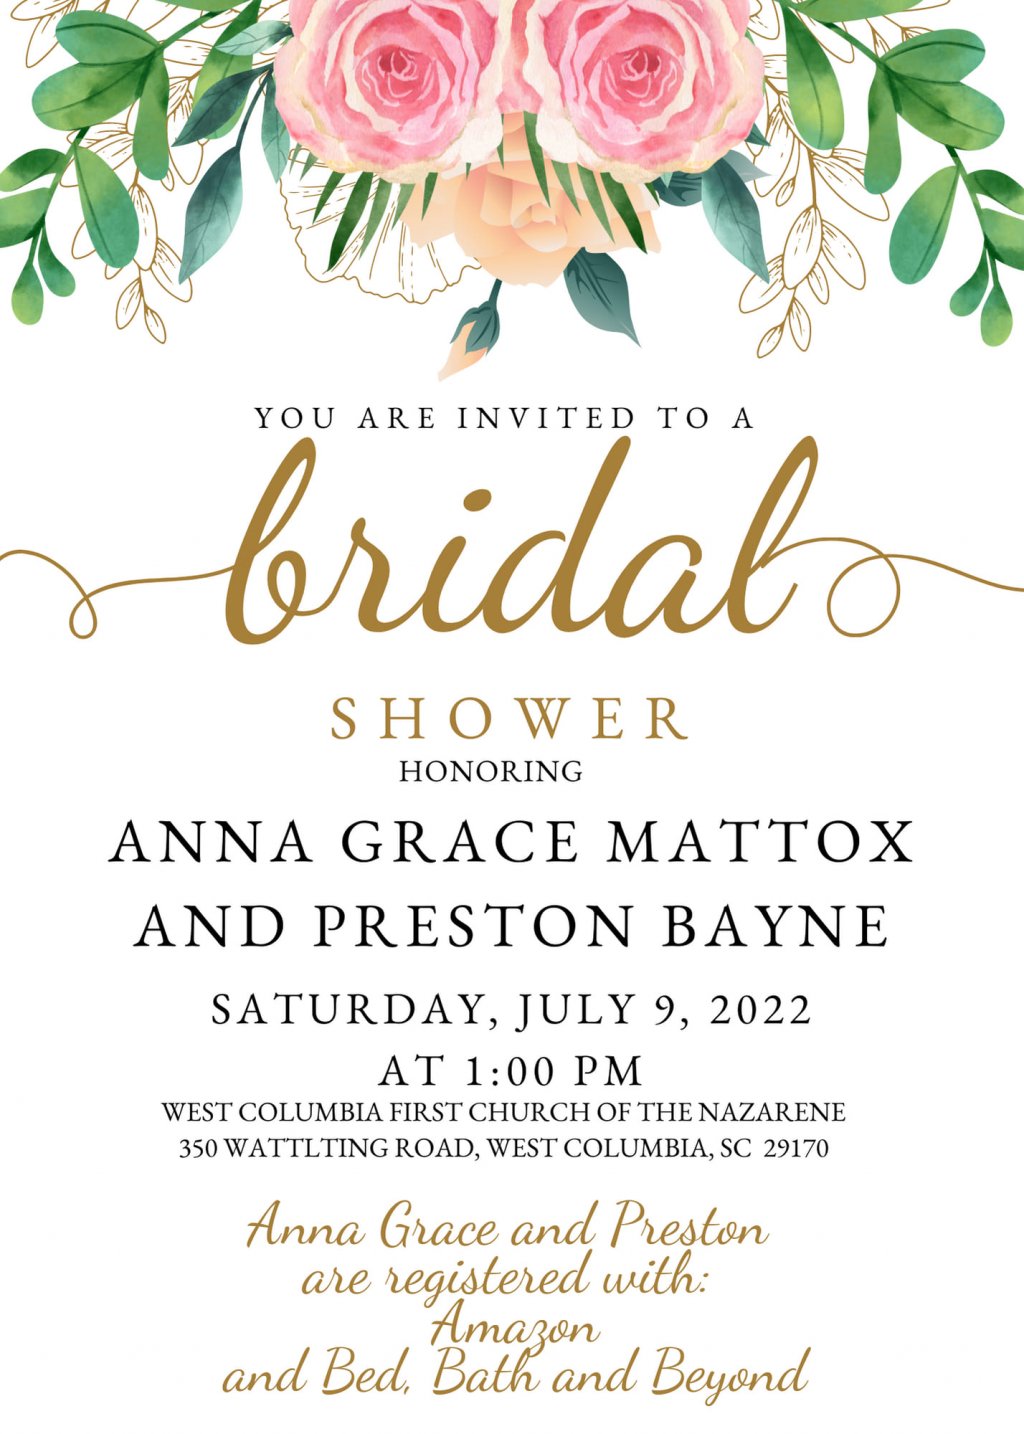 Bridal Shower for Anna Grace Mattox and Preston Bayne